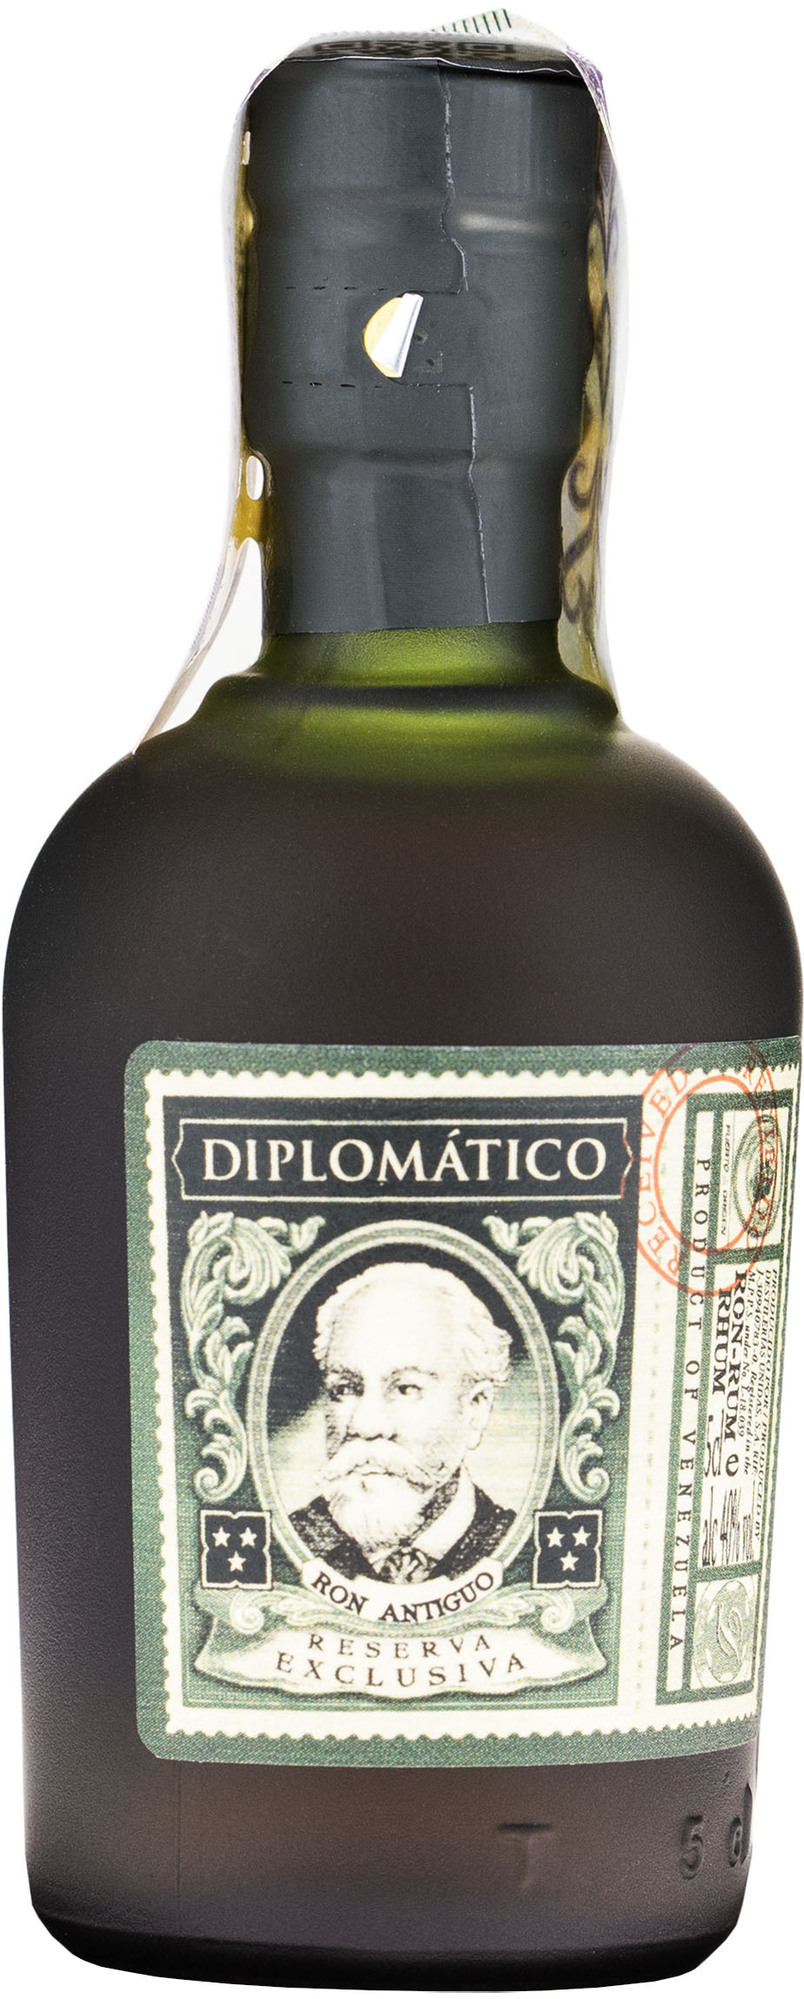 Diplomatico Diplomático Reserva Exclusiva 0,05 l